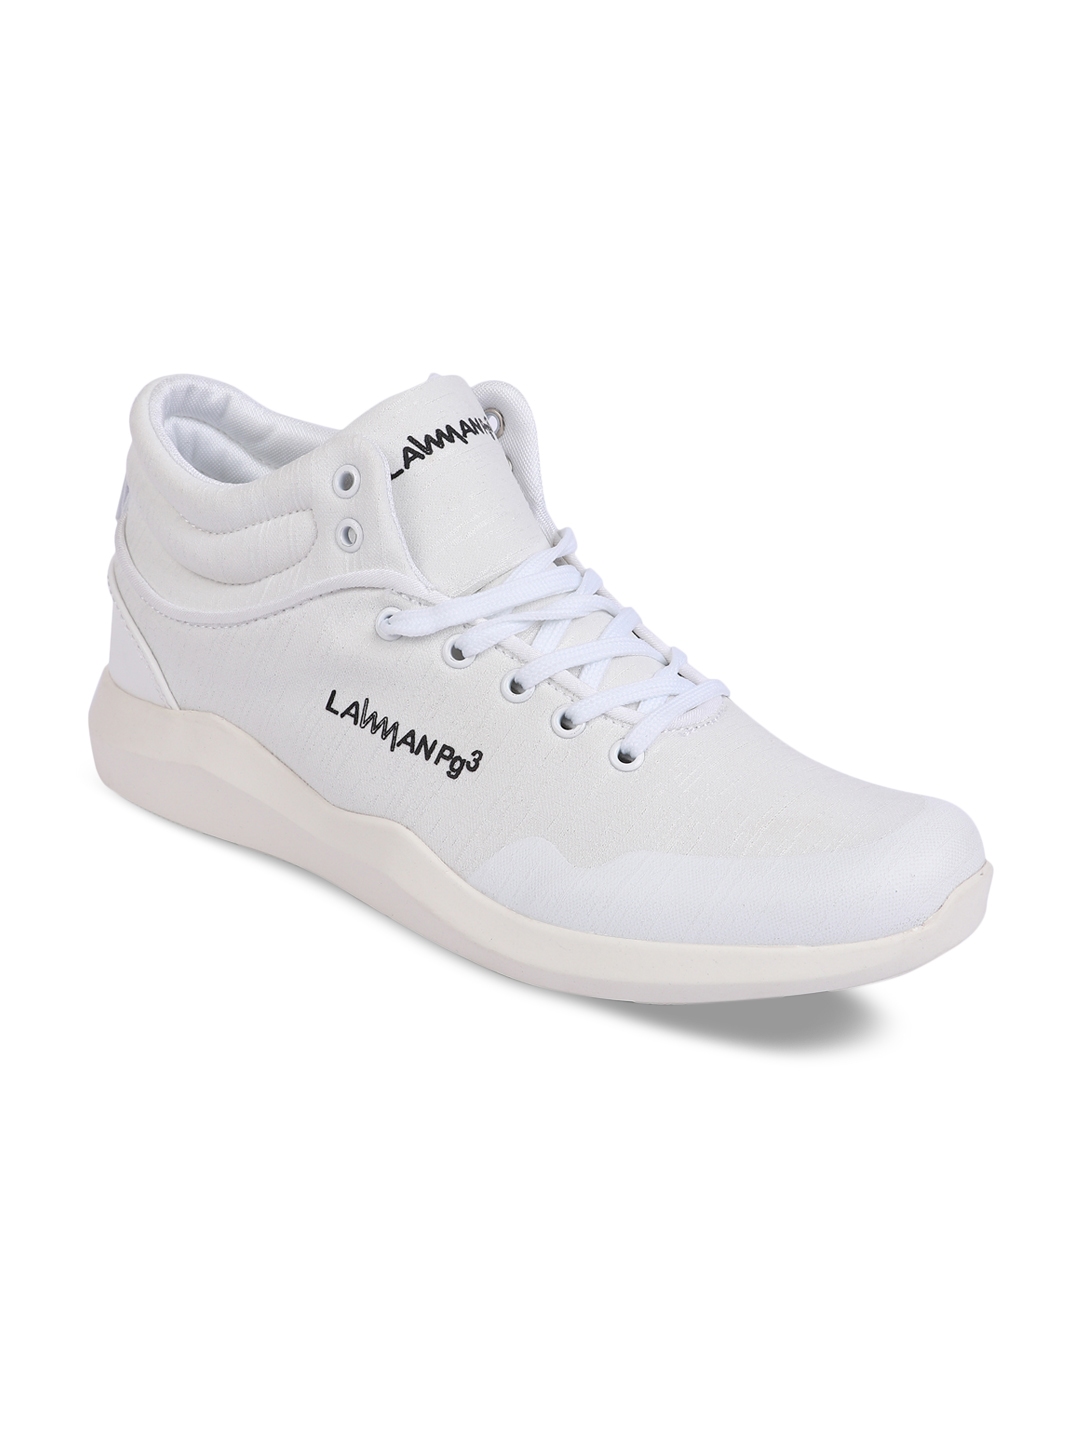 lawman sports shoes